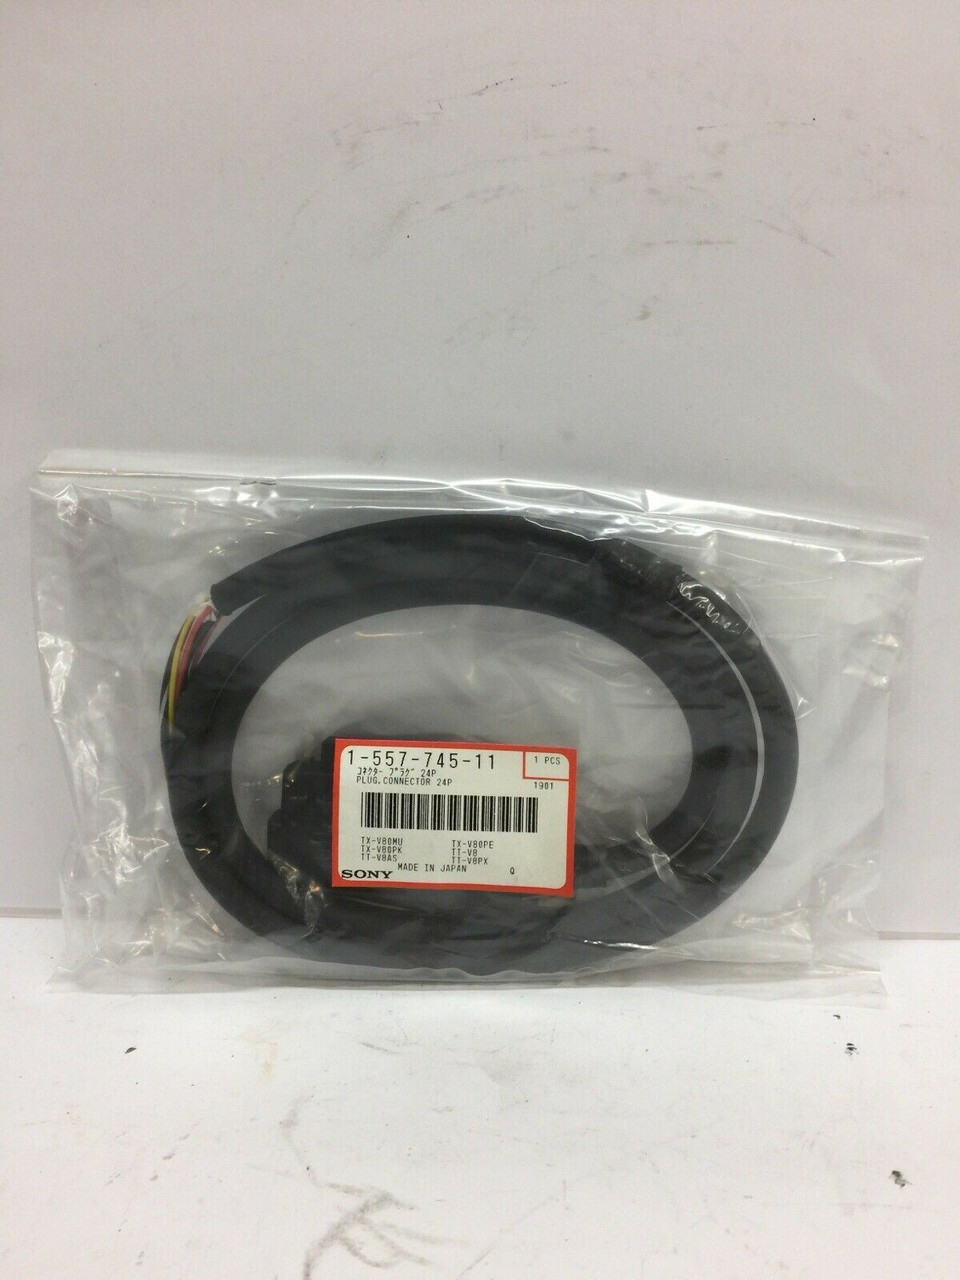 Connector 24P Plug 1-557-745-11 Sony